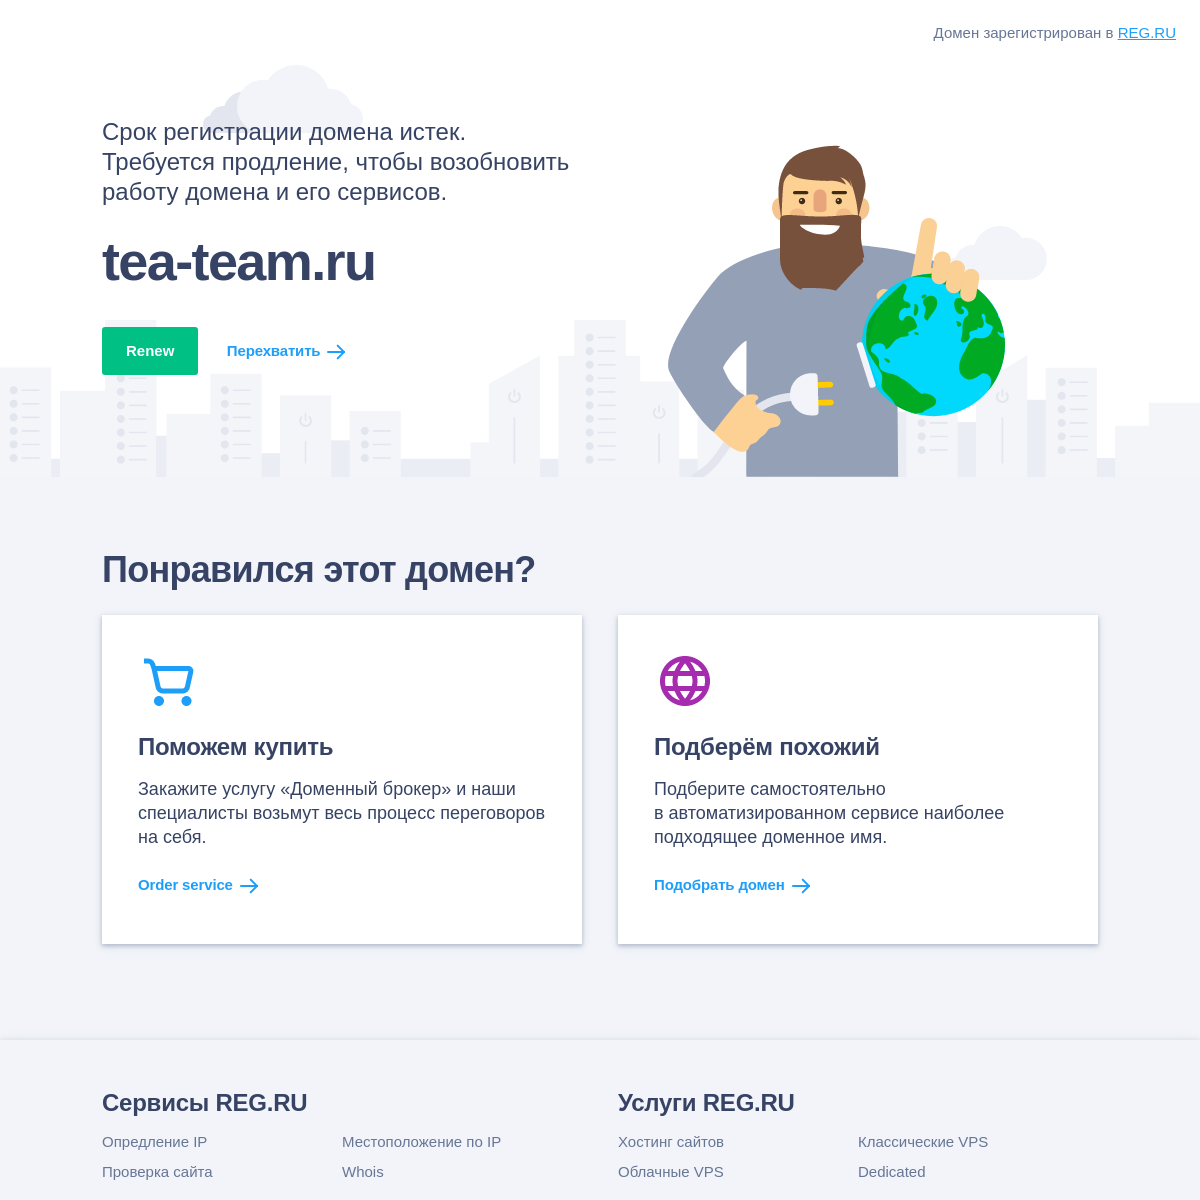 A complete backup of tea-team.ru